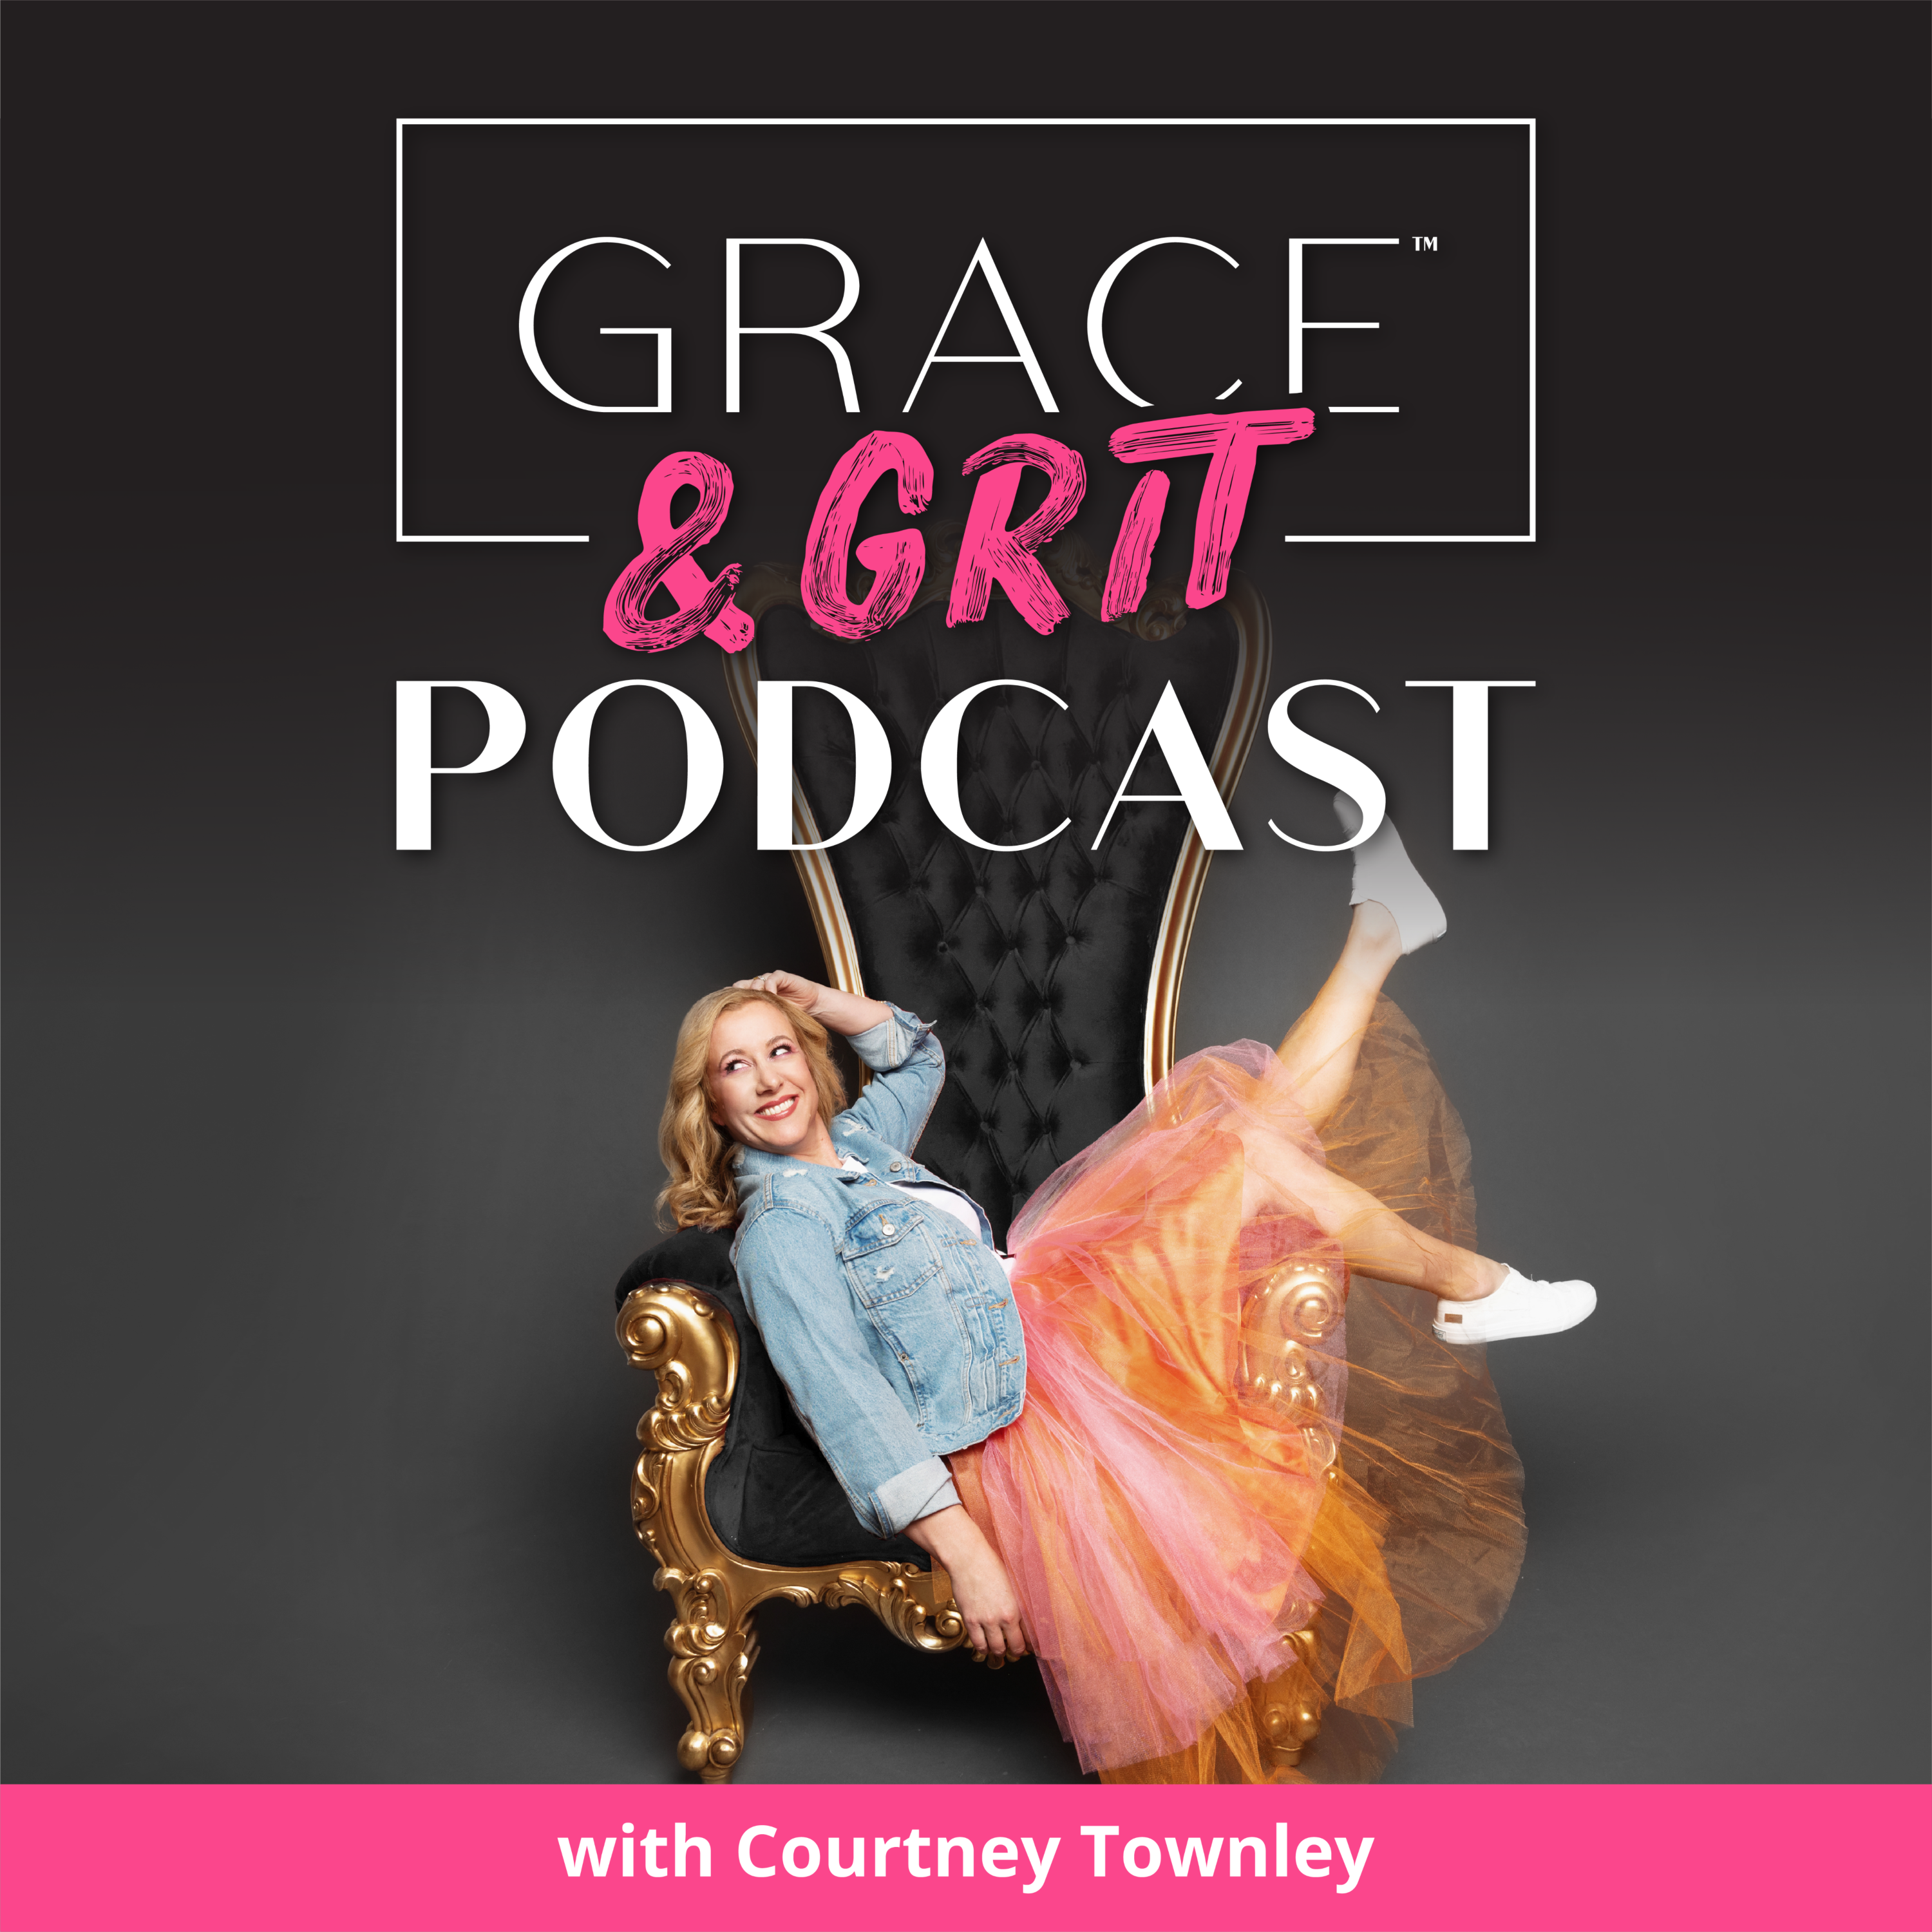 Grace & Grit Podcast